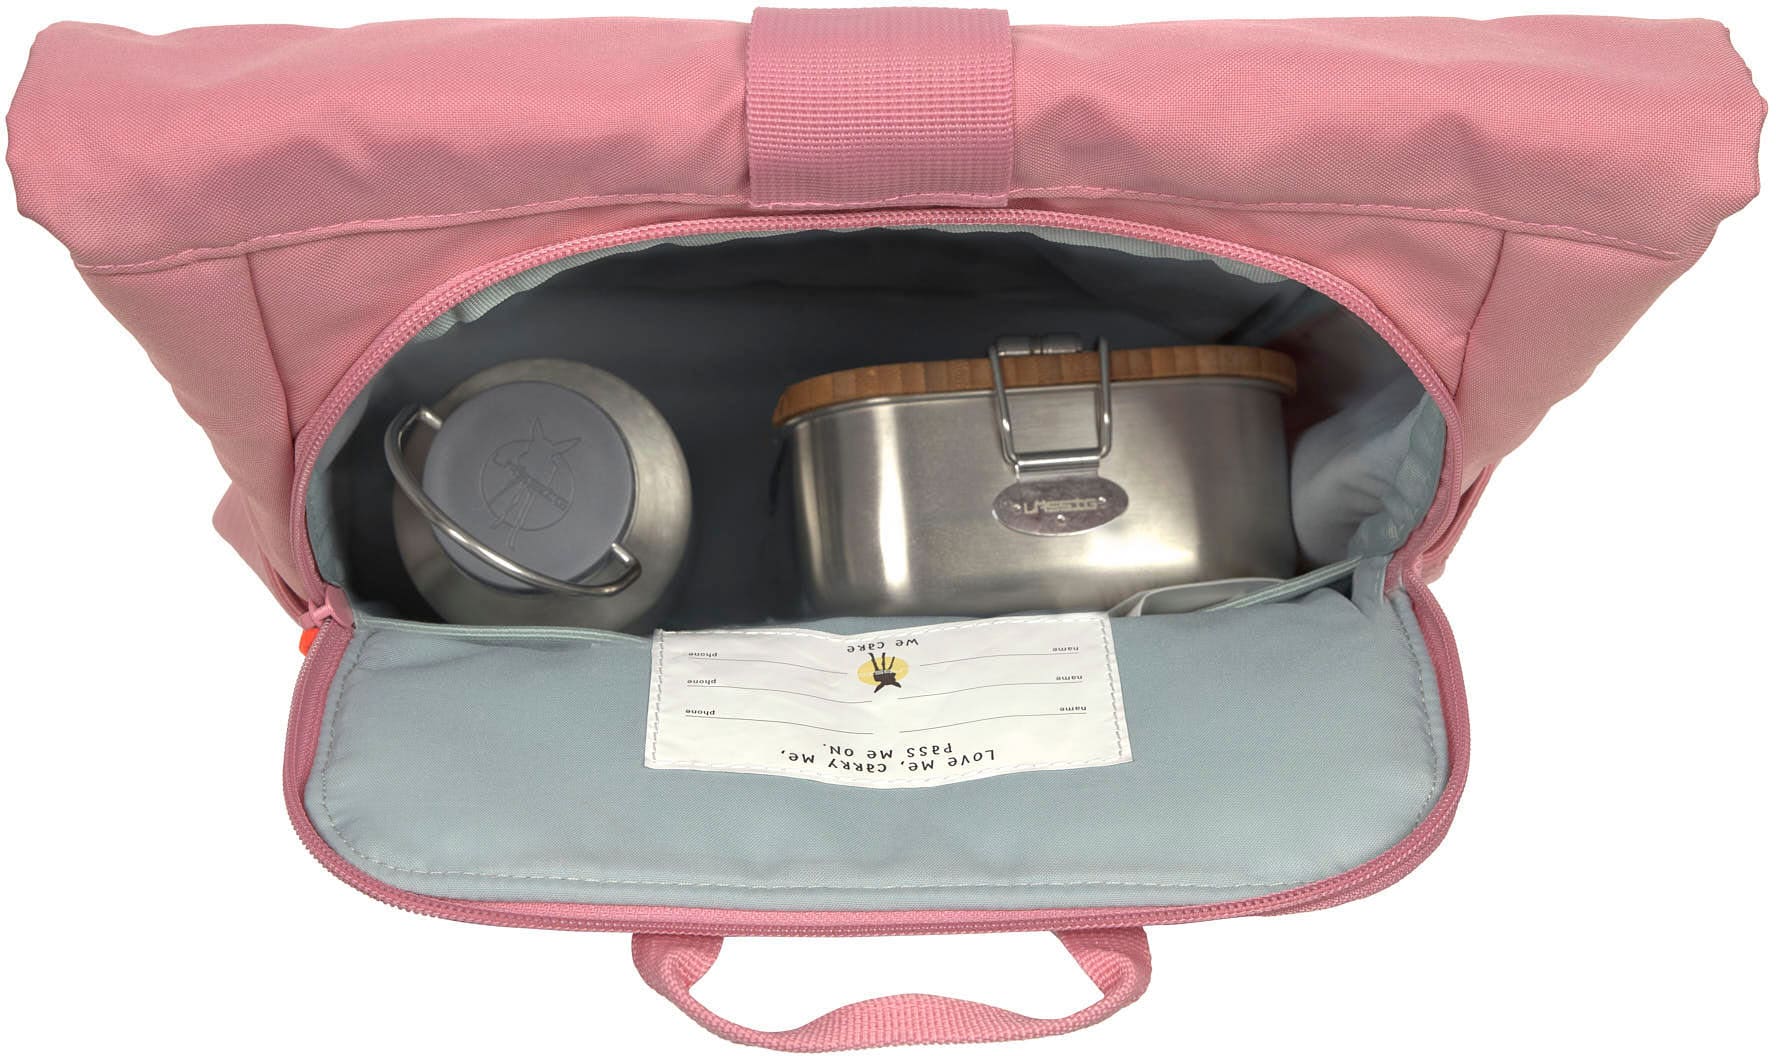 LÄSSIG Kinderrucksack »Medium Rolltop Backpack, pink«, Reflektoren, aus recycelten PET-Flaschen